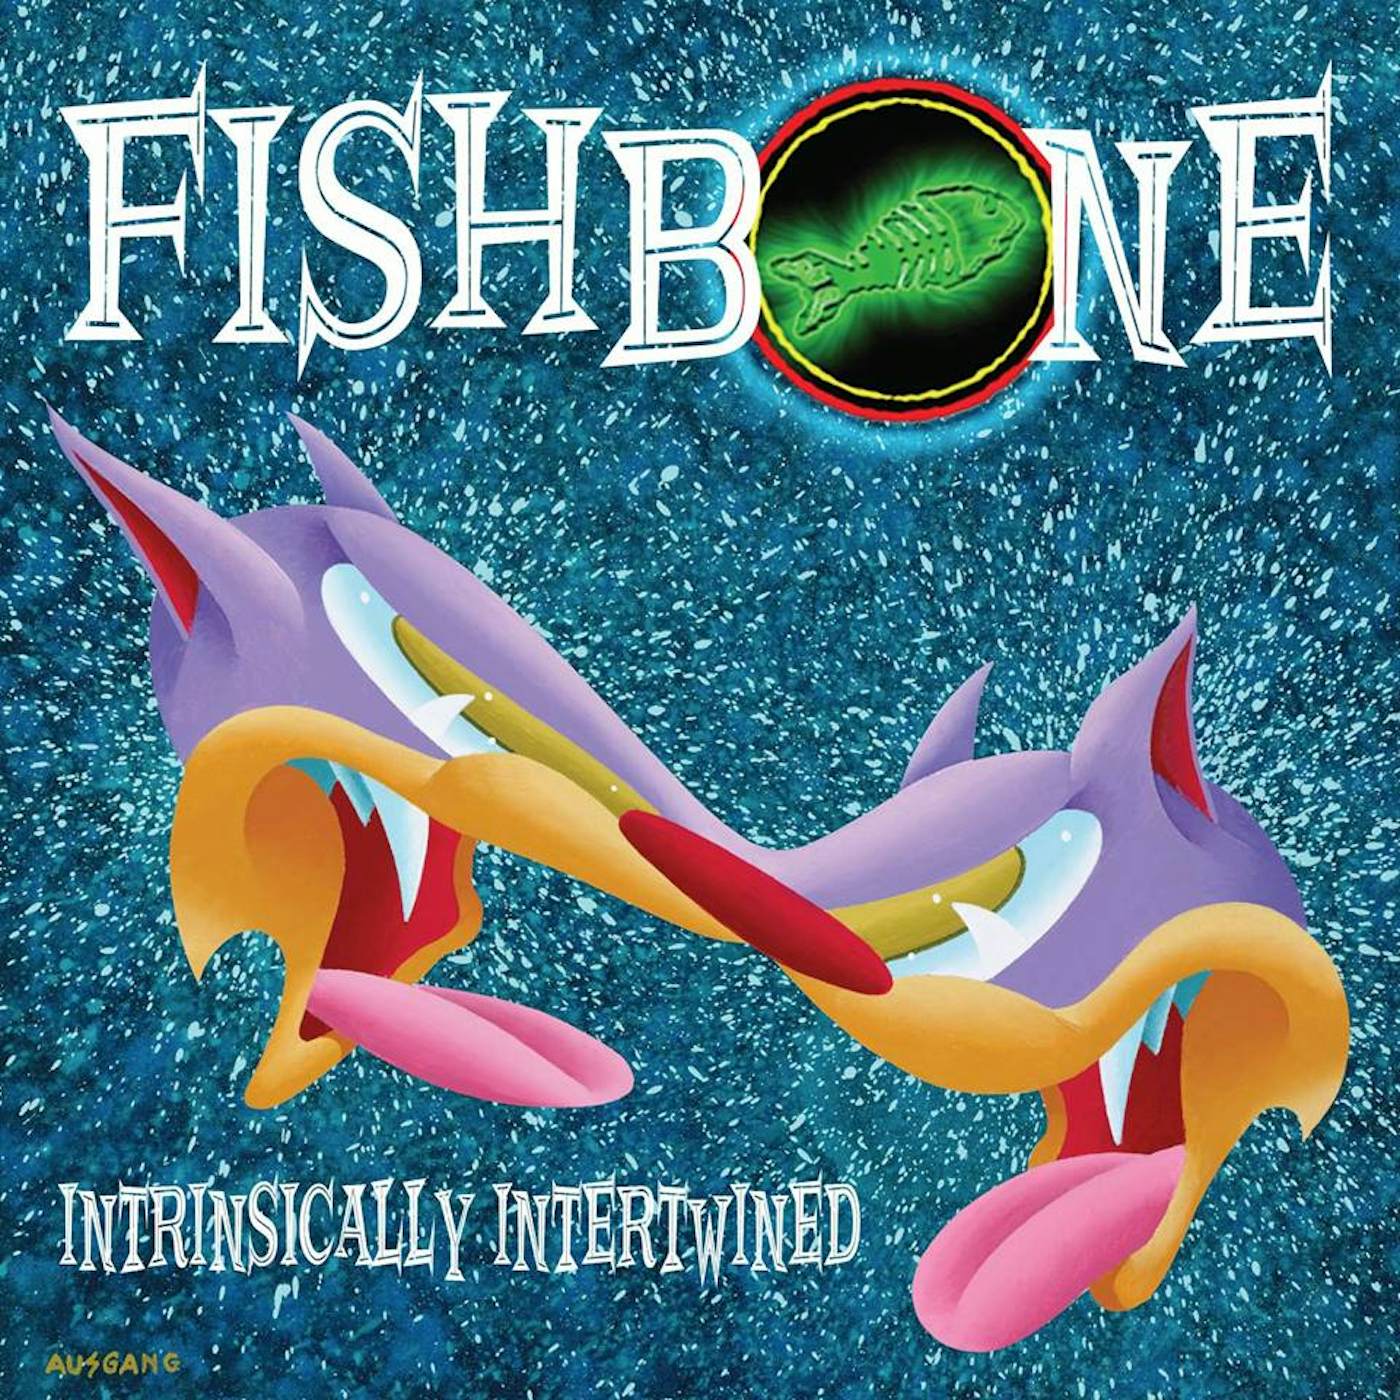 Fishbone Intrinsically Intertwined Vinyl Record